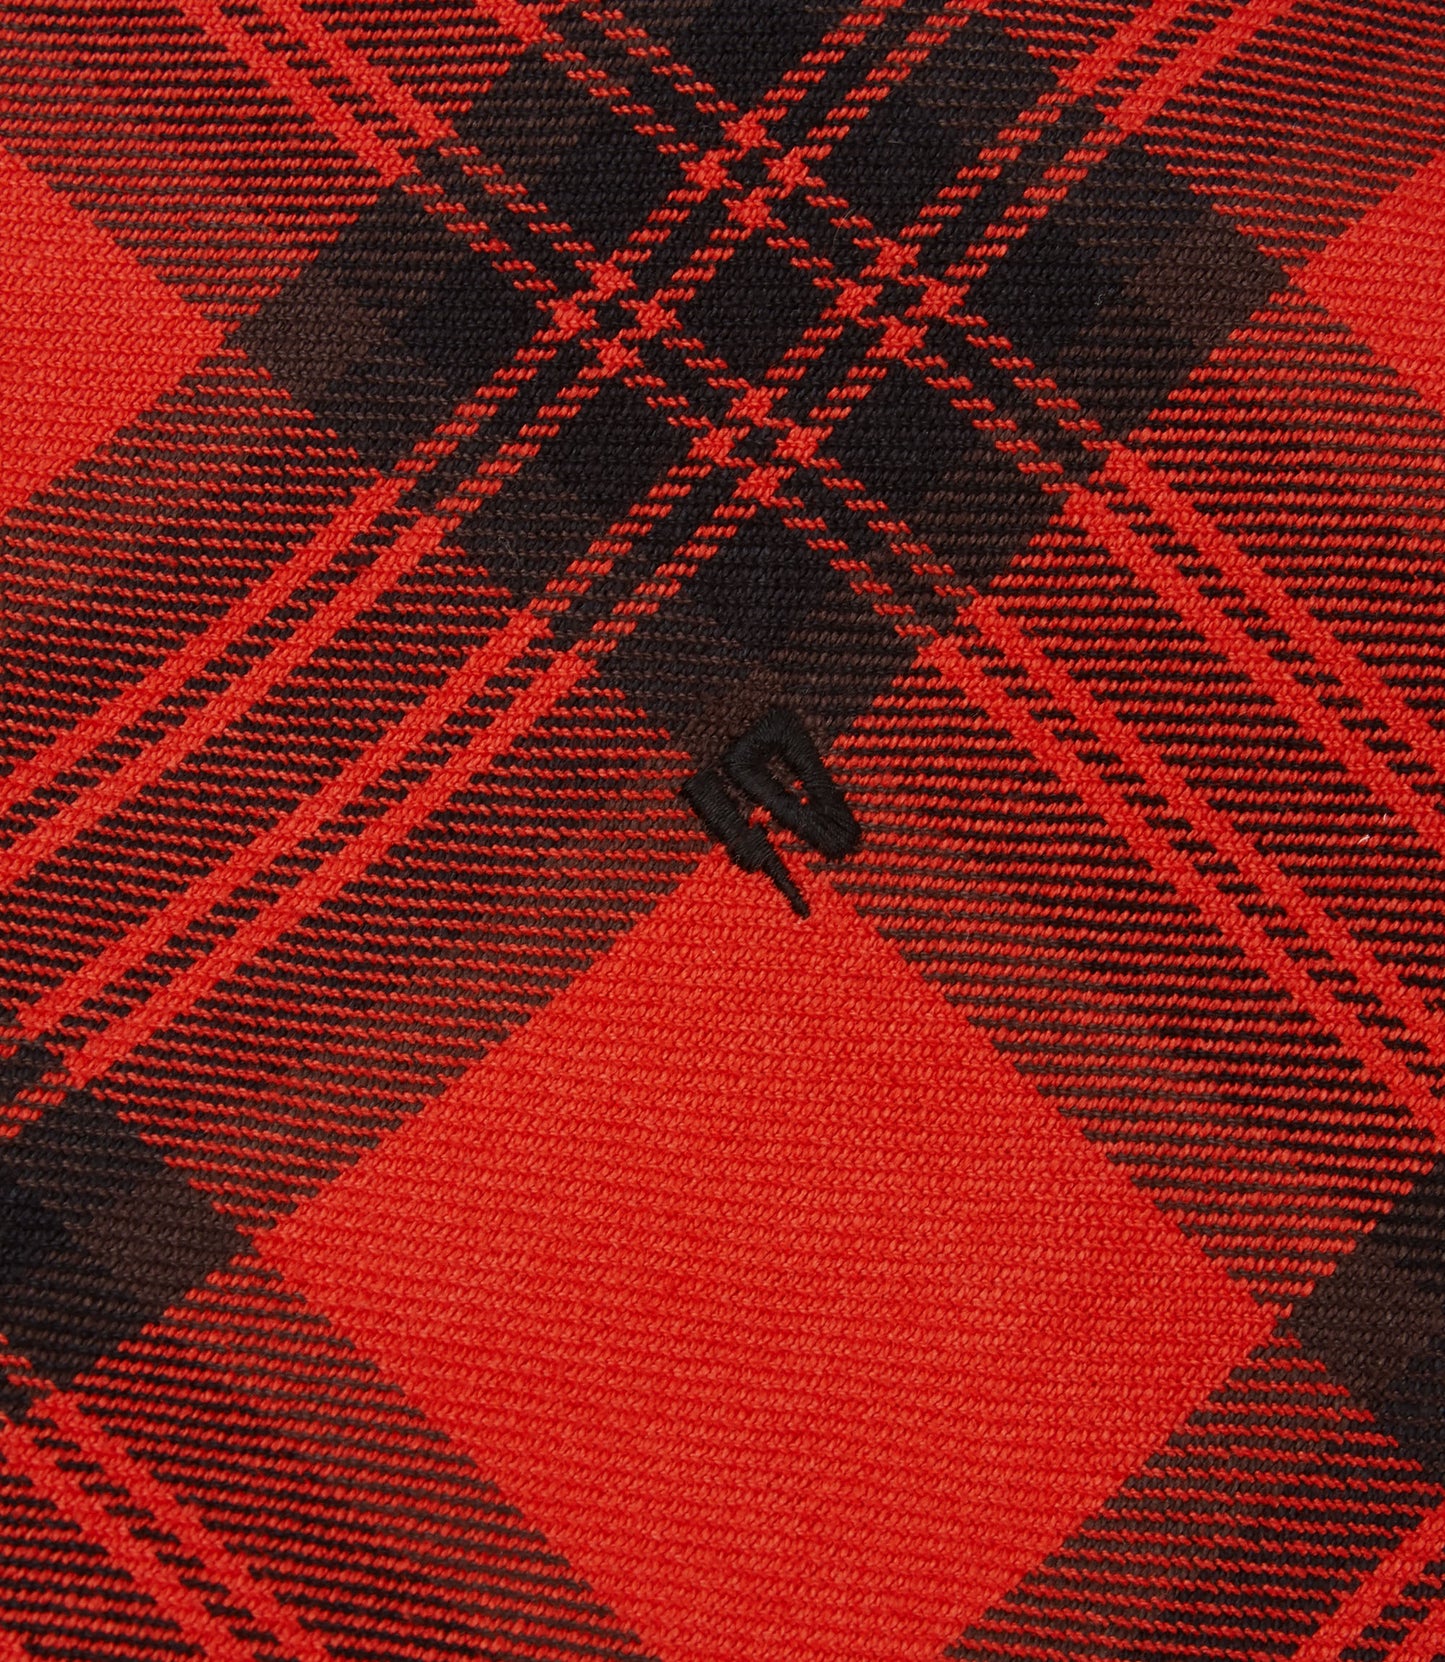 10Deep -  Flannel Men's Coach's Jacket, Red